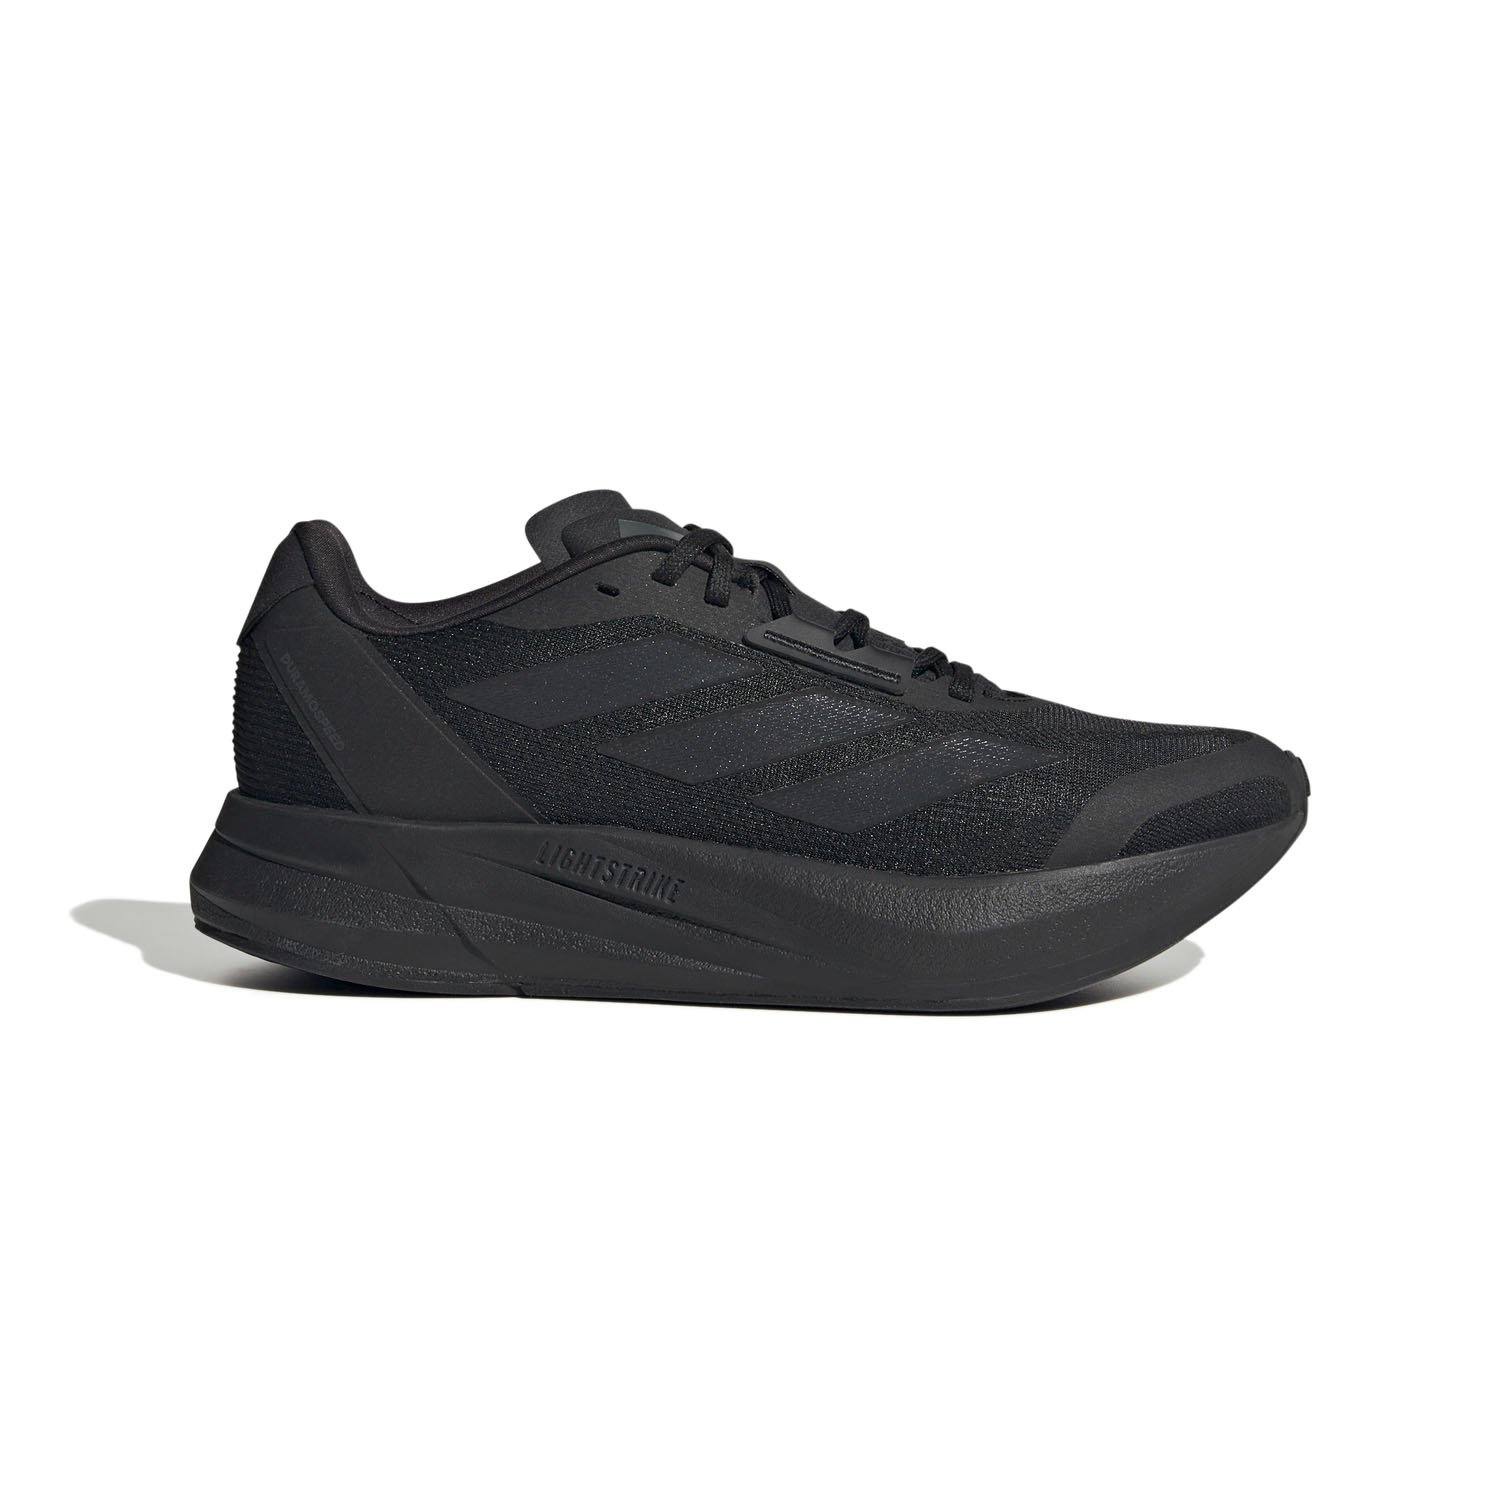 Adidas Duramo Speed Kadın Koşu Ayakkabısı - SİYAH - 1